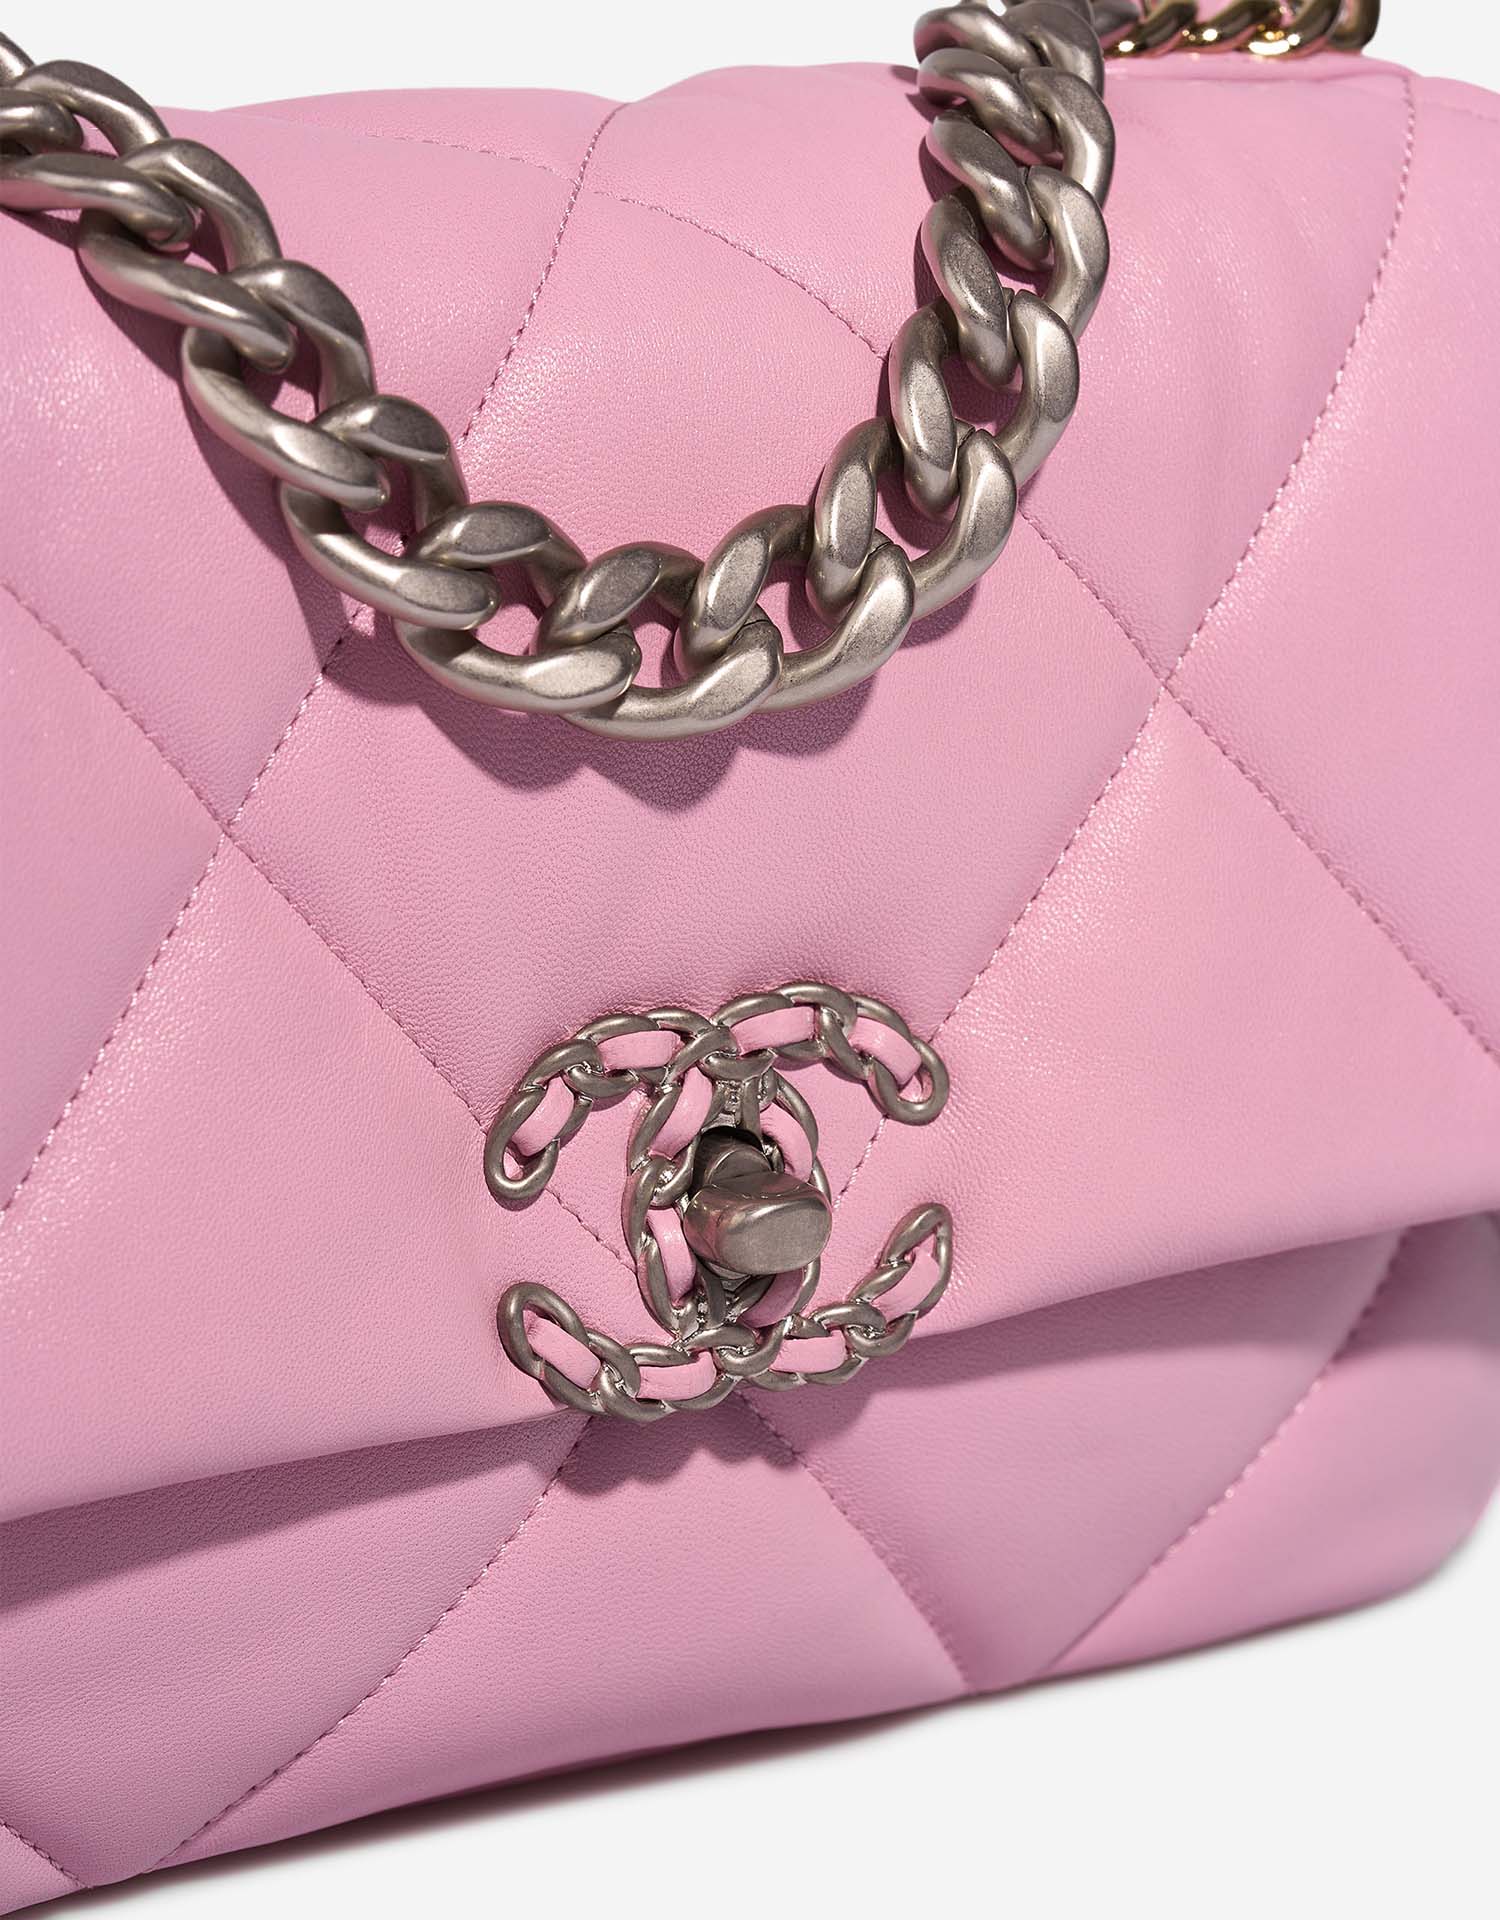 Chanel 19 Flapbag Pink Closing System  | Sell your designer bag on Saclab.com